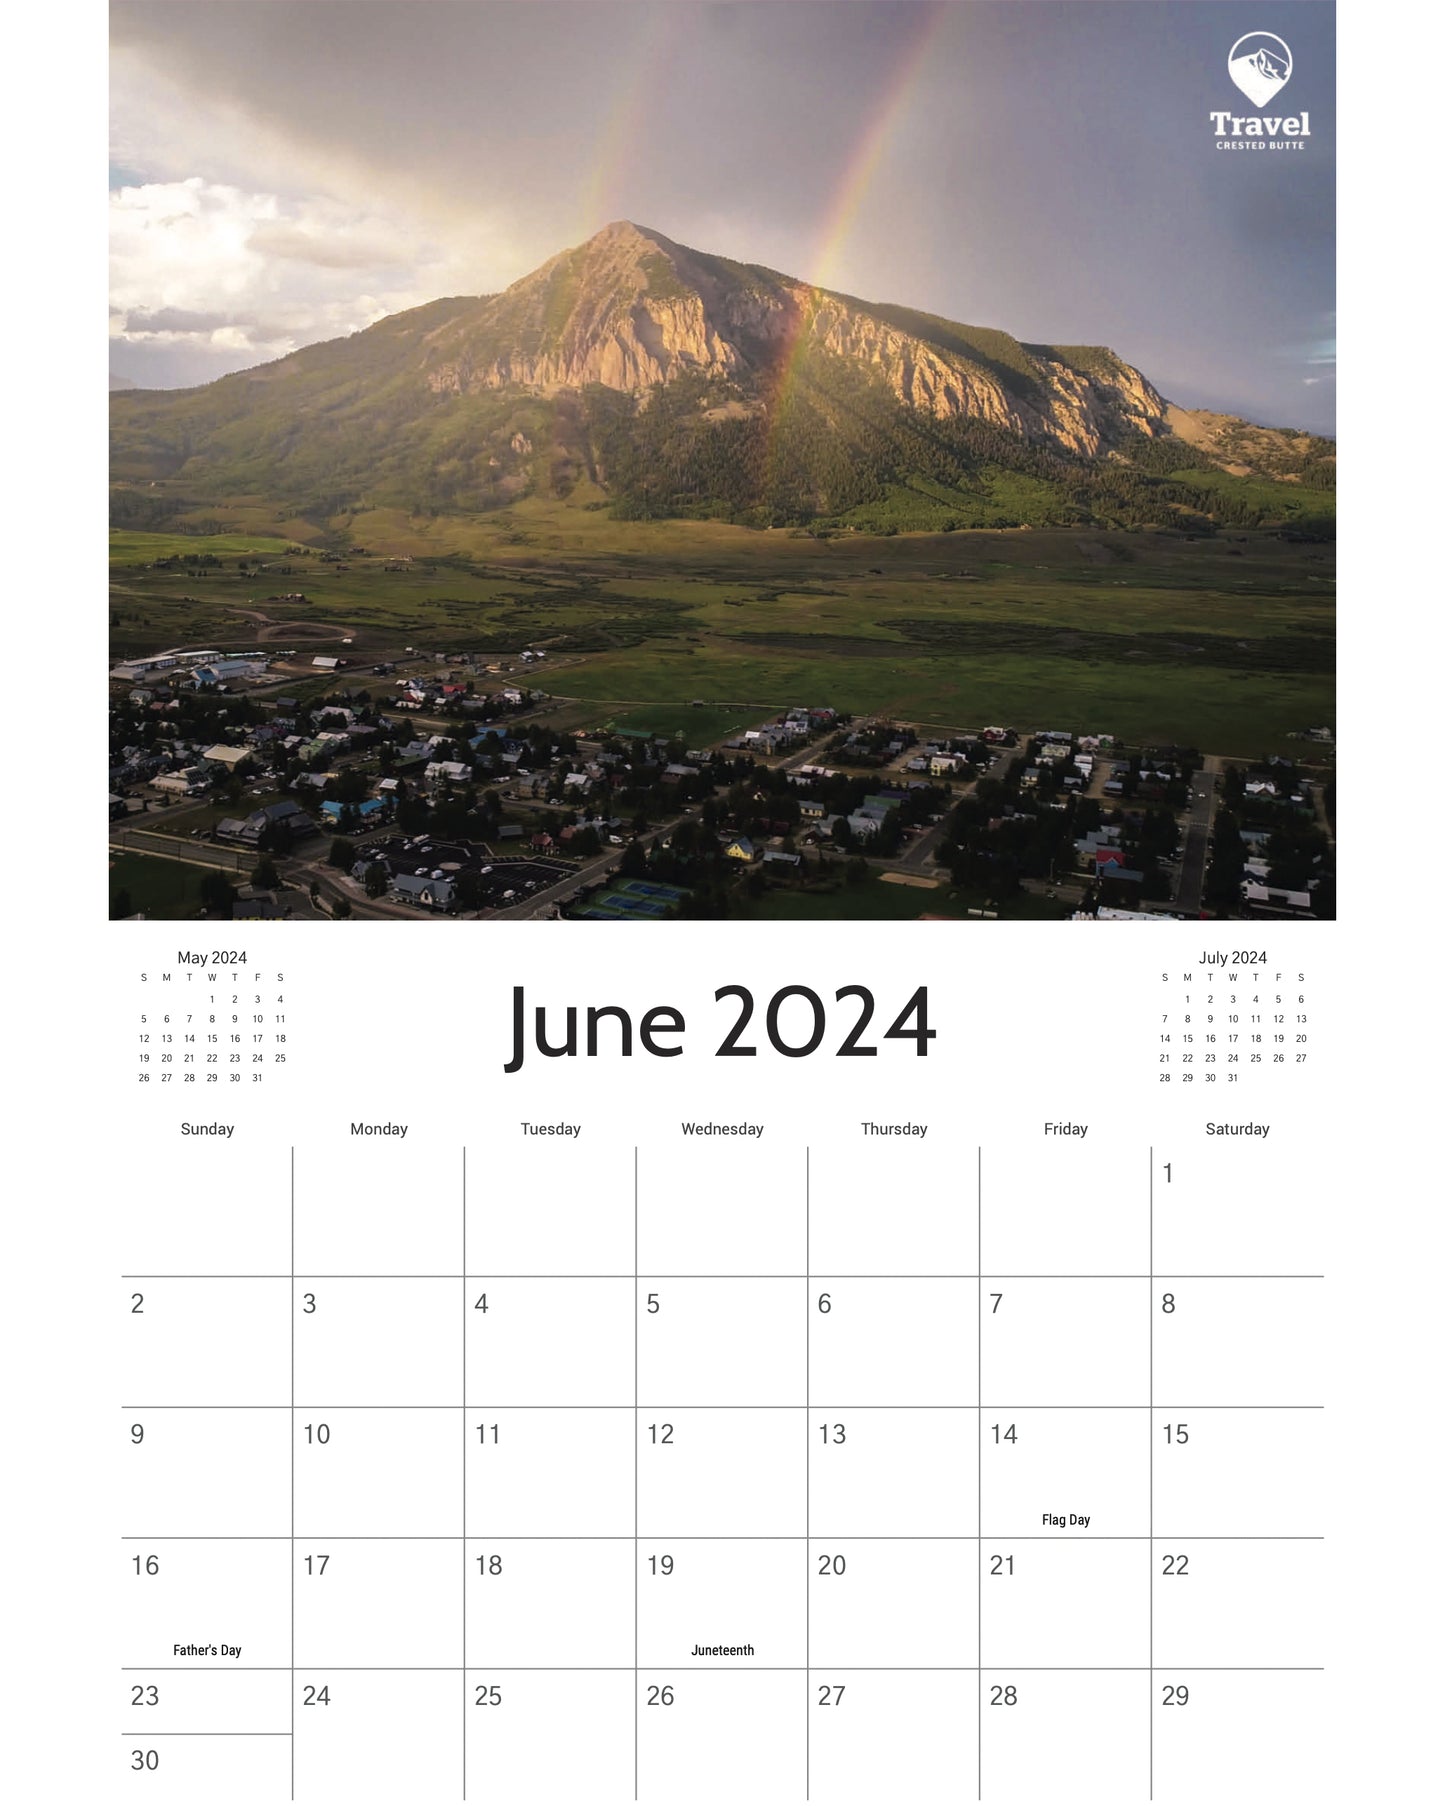 2024 Travel Crested Butte Calendar